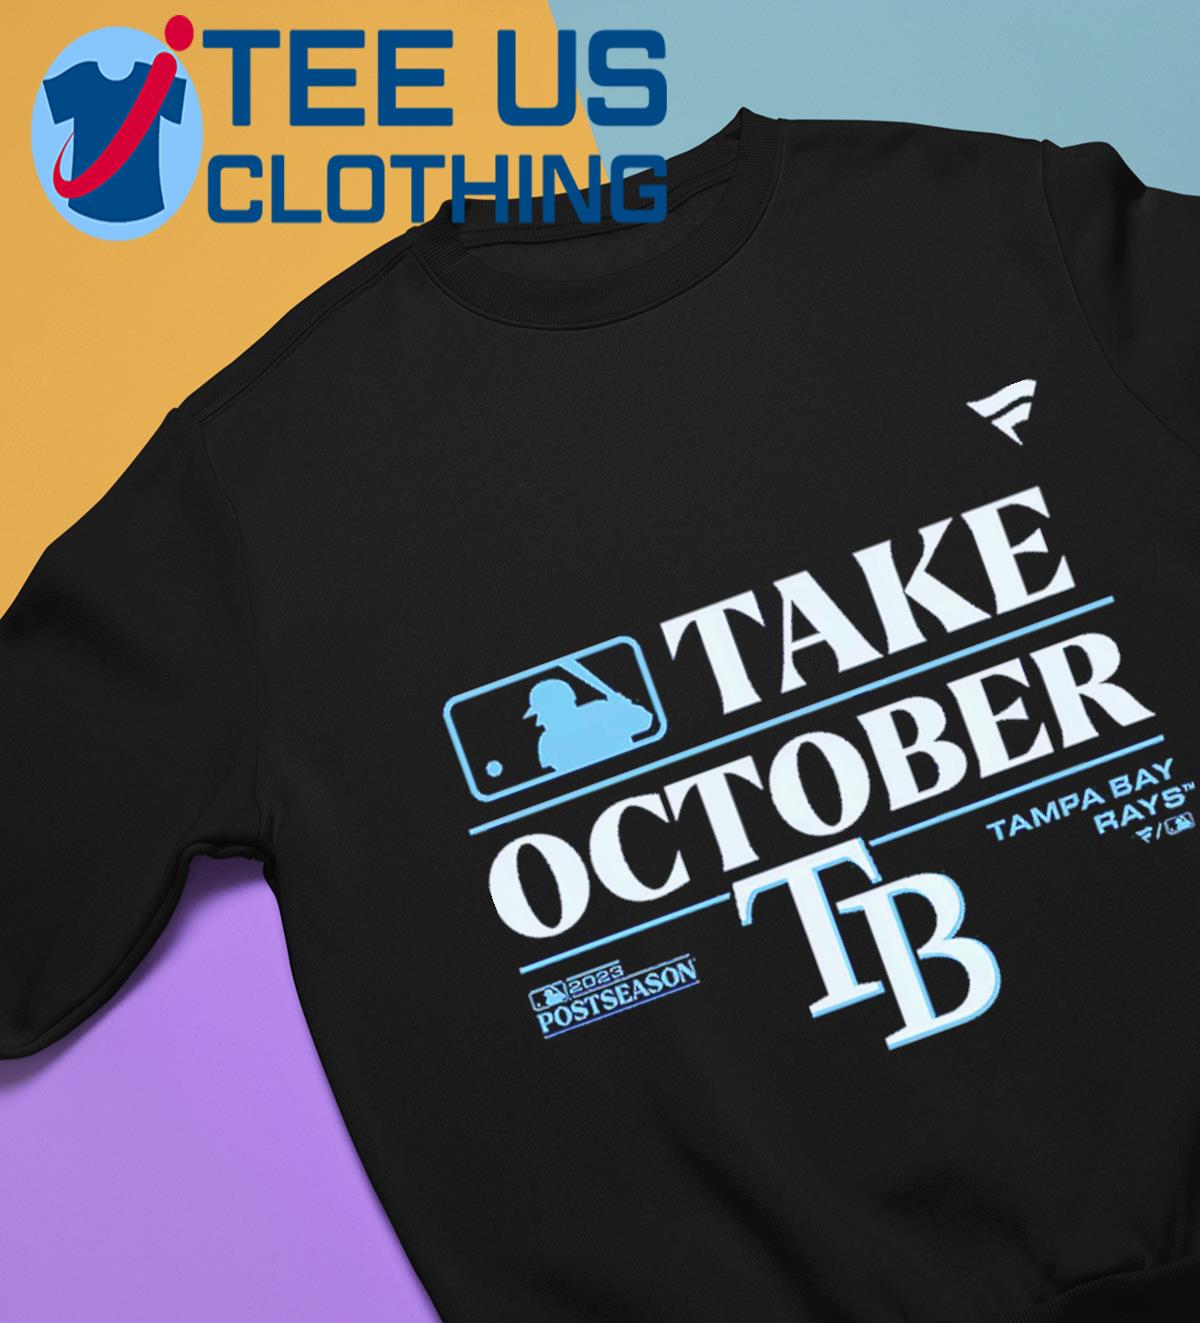 MLB Women's 2023 Postseason Take October Tampa Bay Rays Locker Room T- Shirt